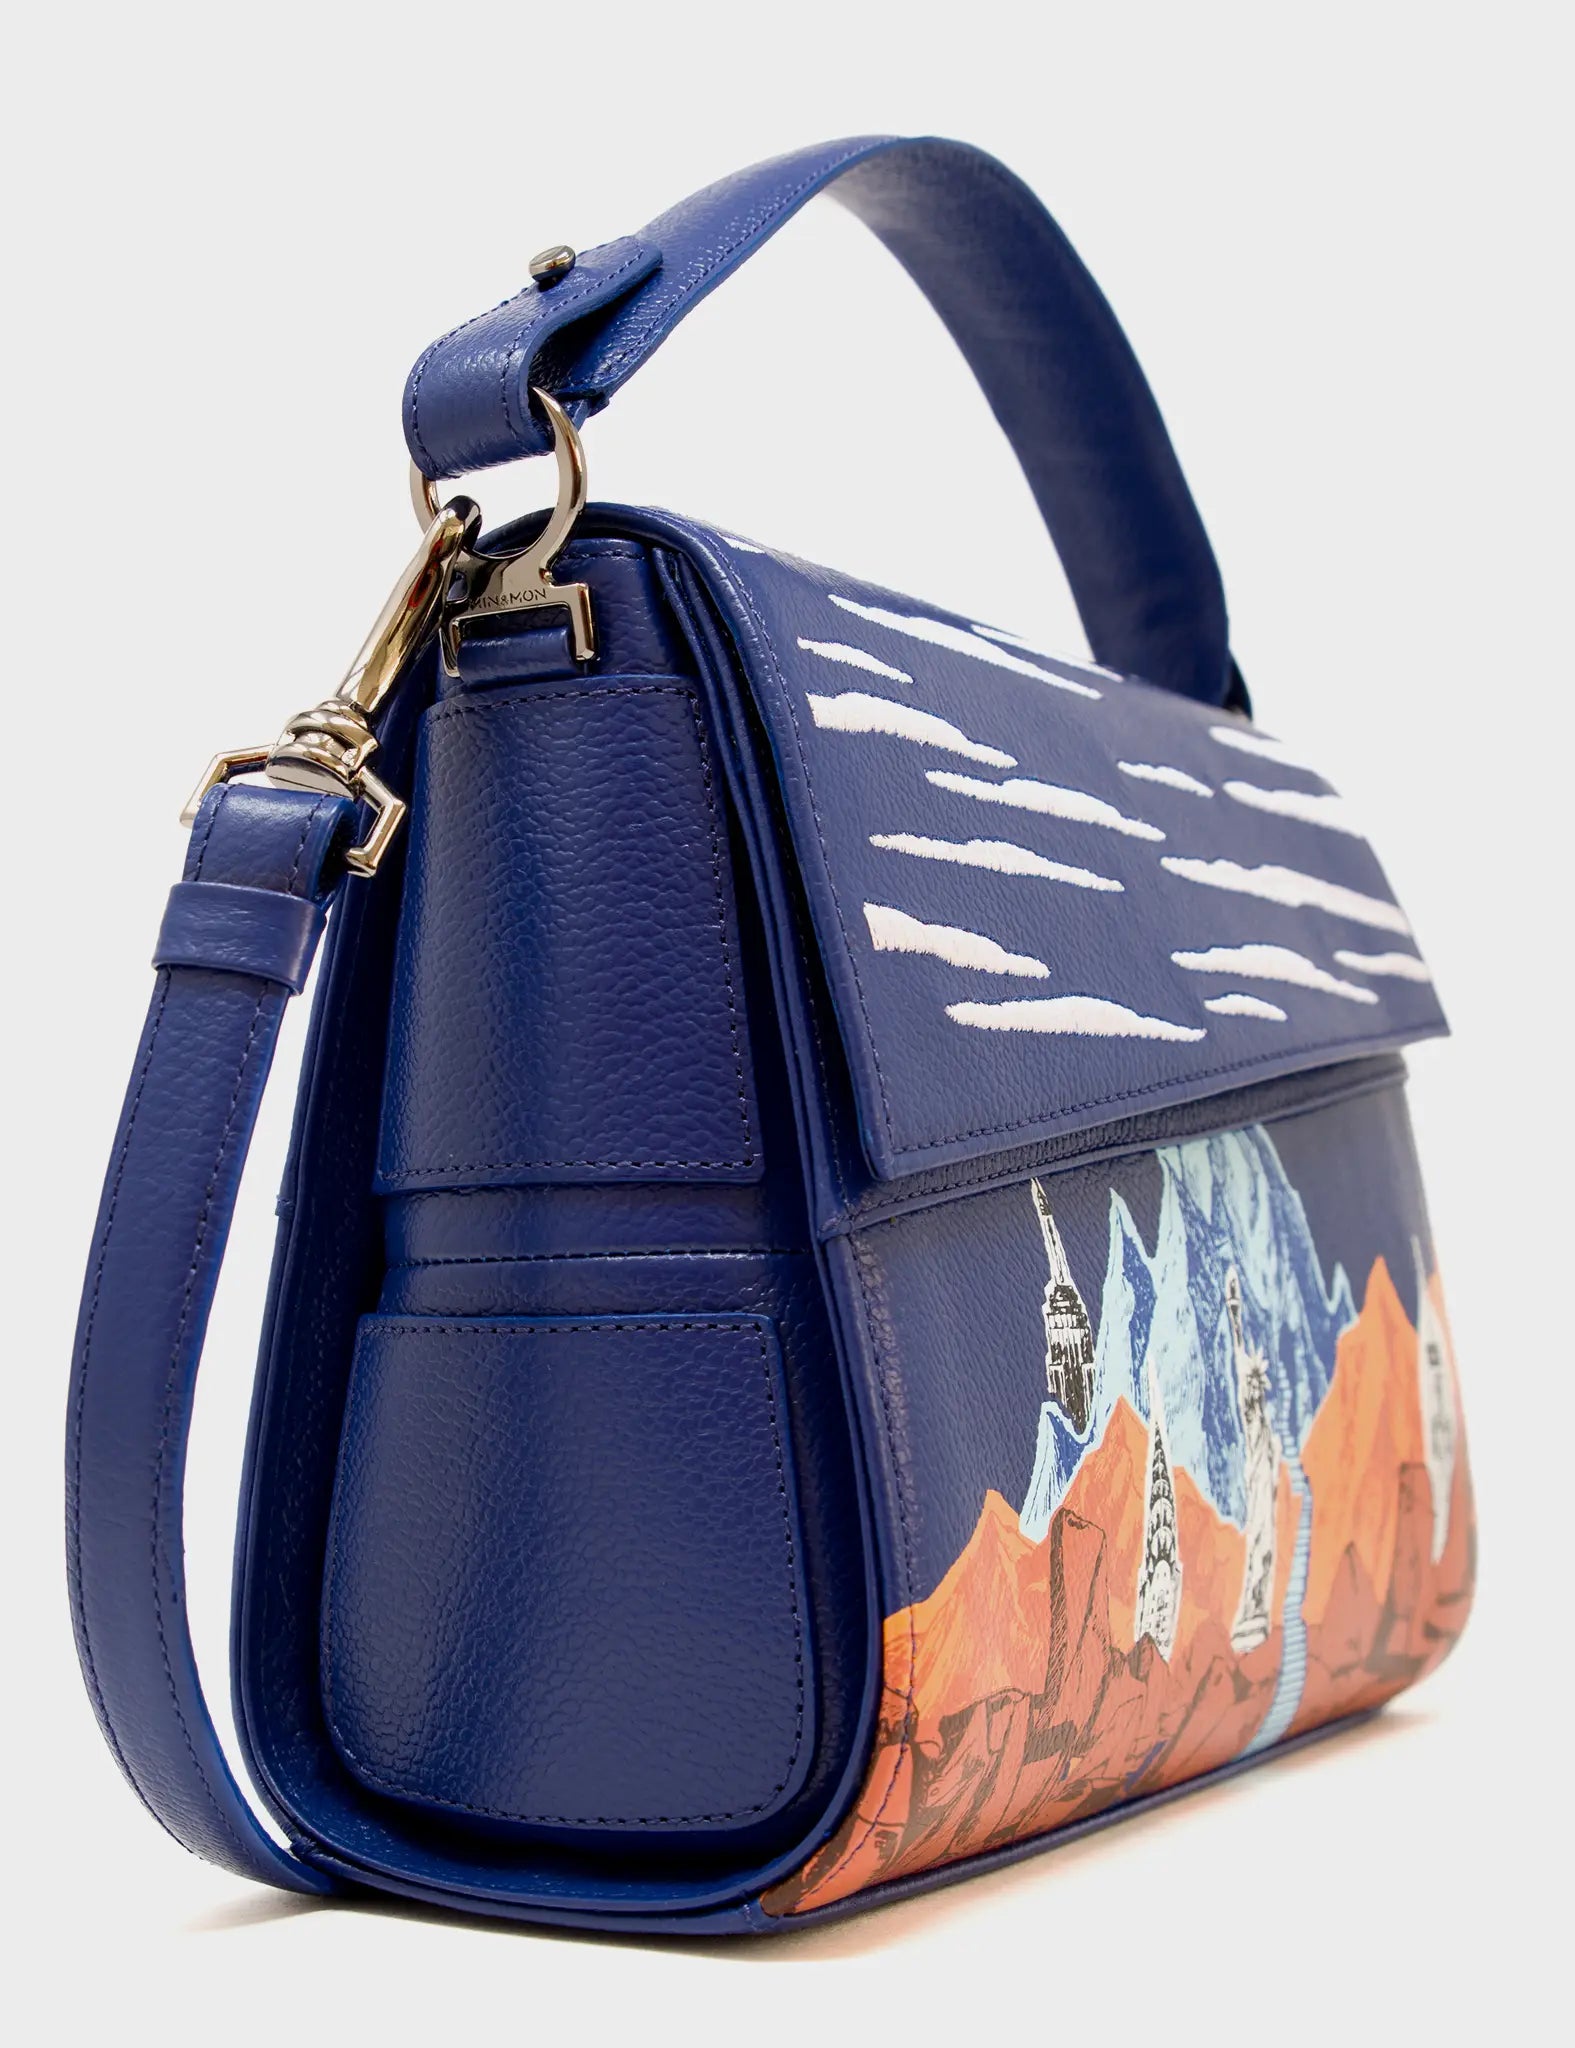 Mini Crossbody Handbag Royal Blue Leather - Clouds Embroidery - Side